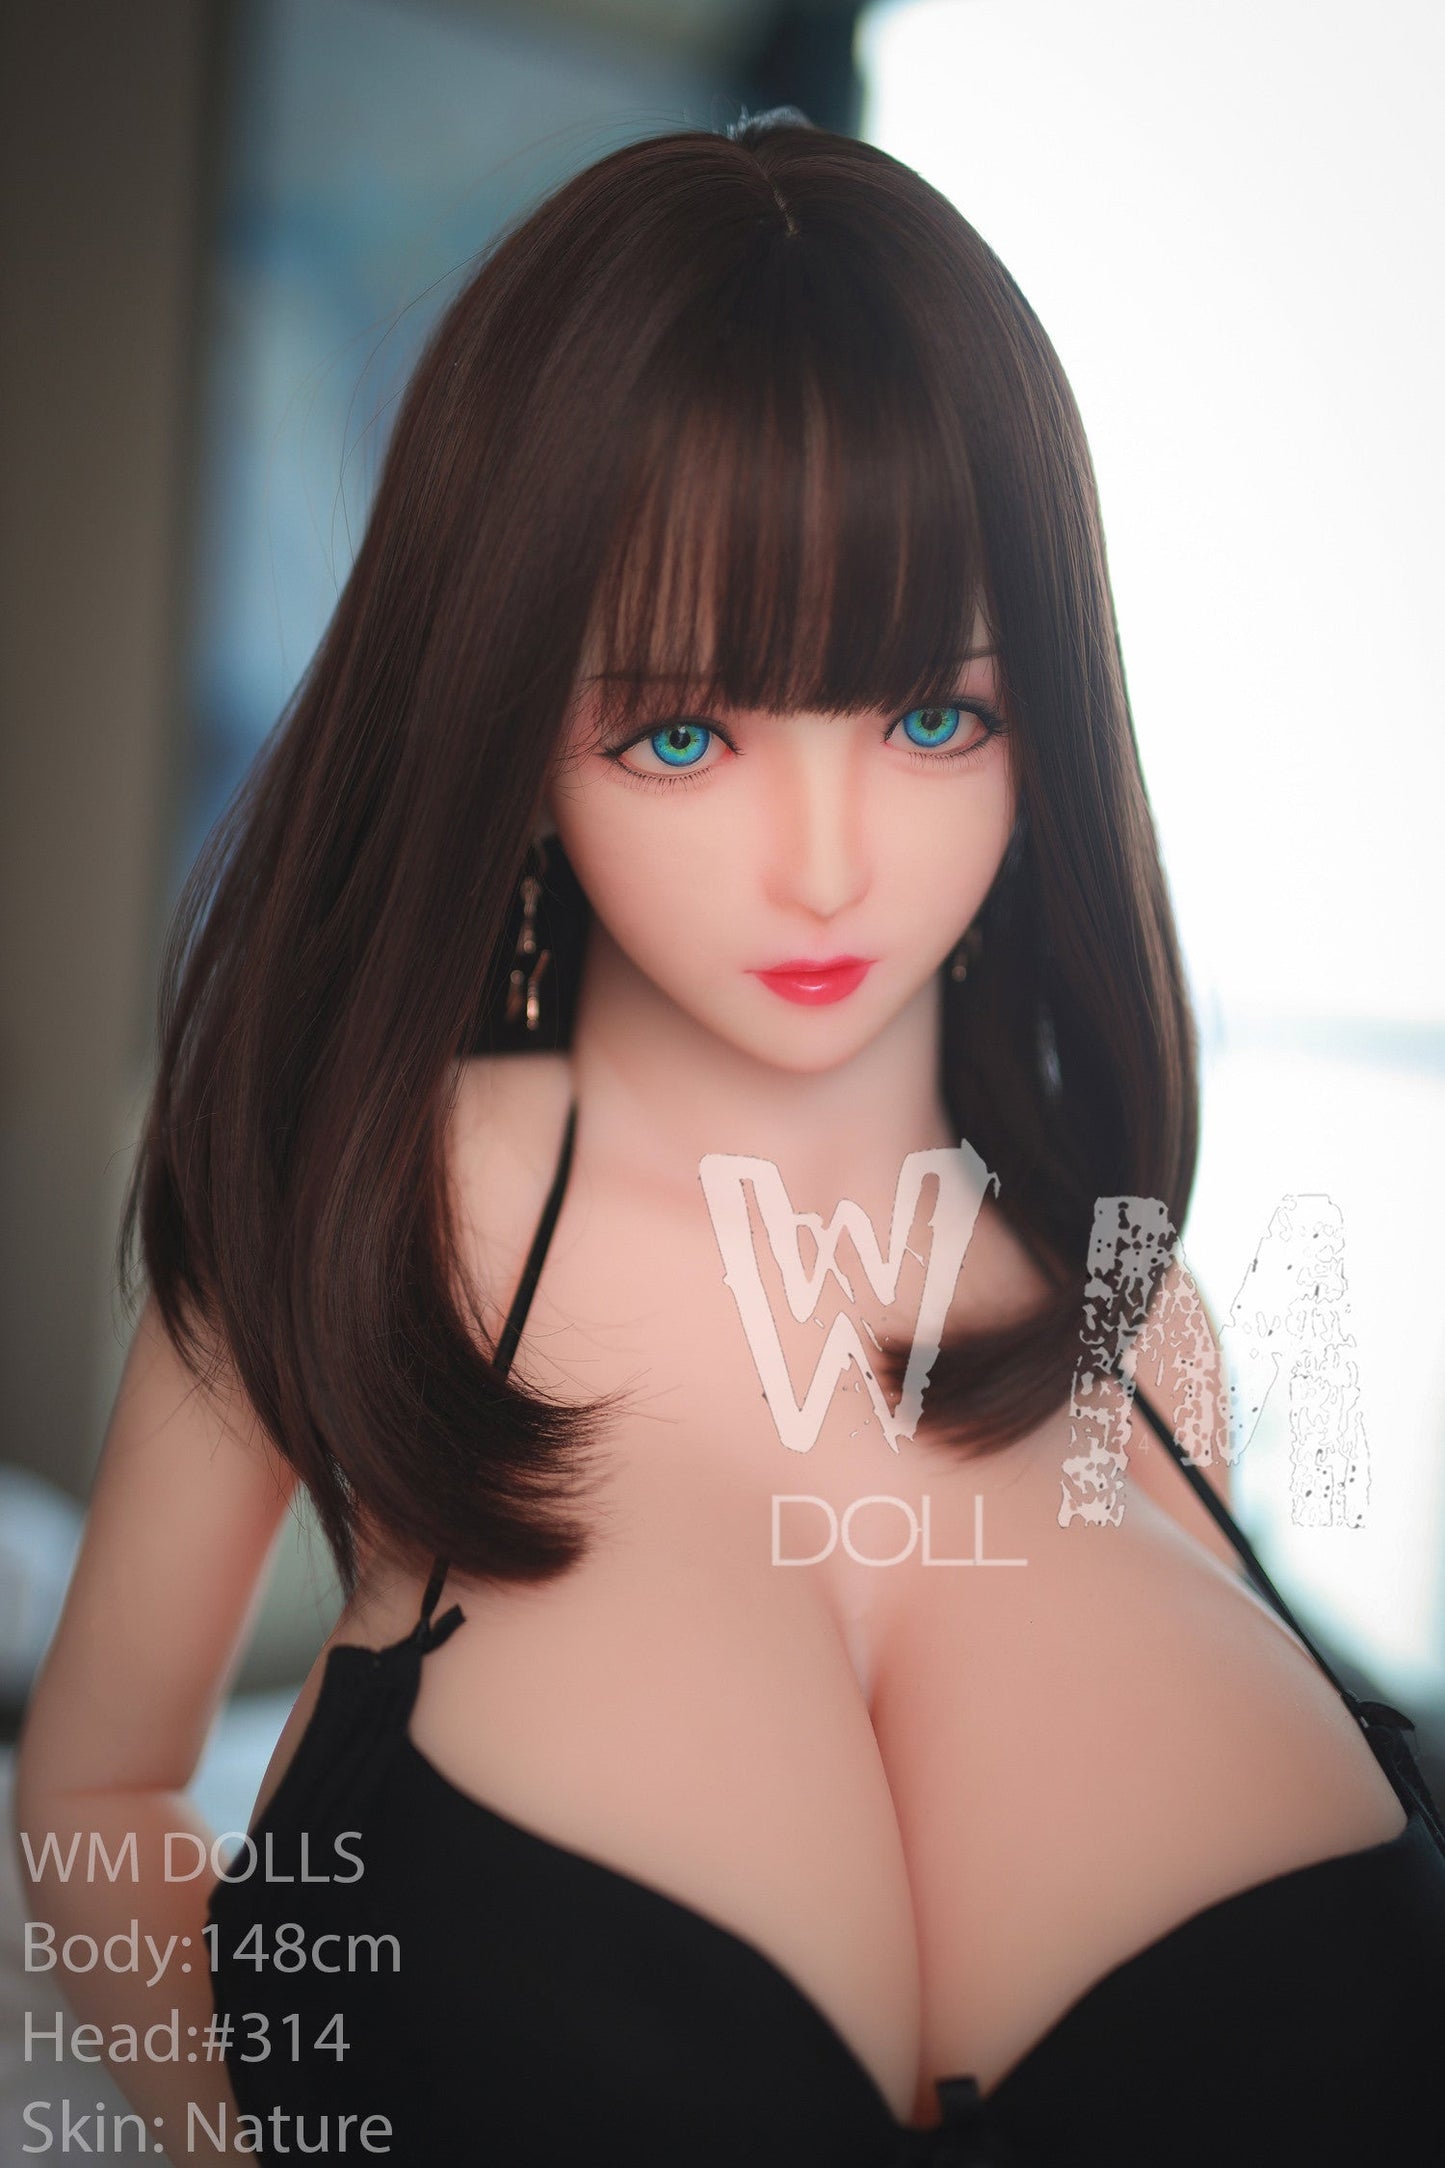 WM Doll 148cm L Cup - Head 314